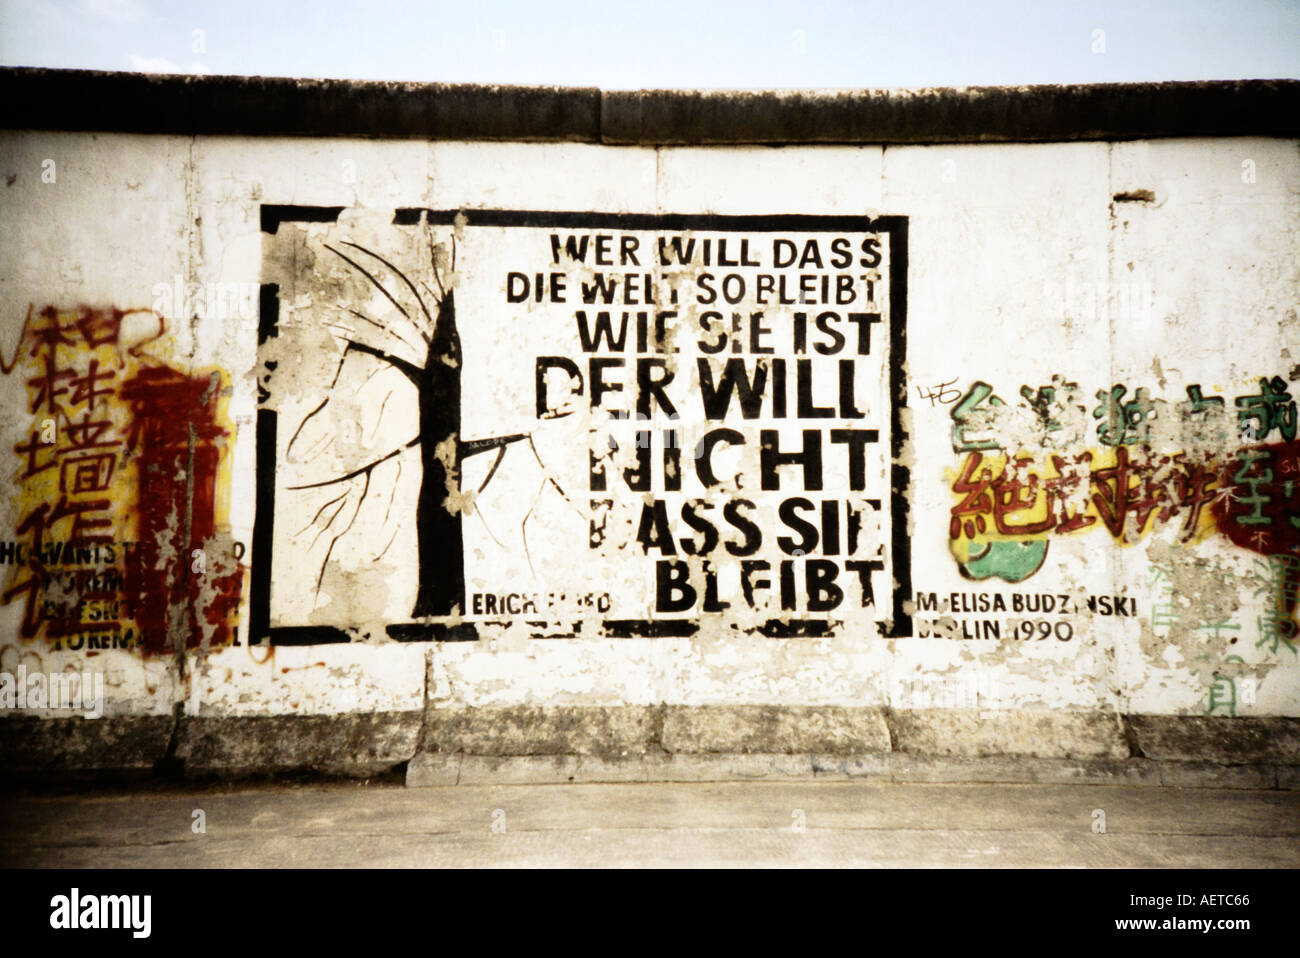 Mural Berlin Wall East Side Gallery Berlin poem by Erich Fried Germany Europe - image taken on a lomo camera Stock Photo